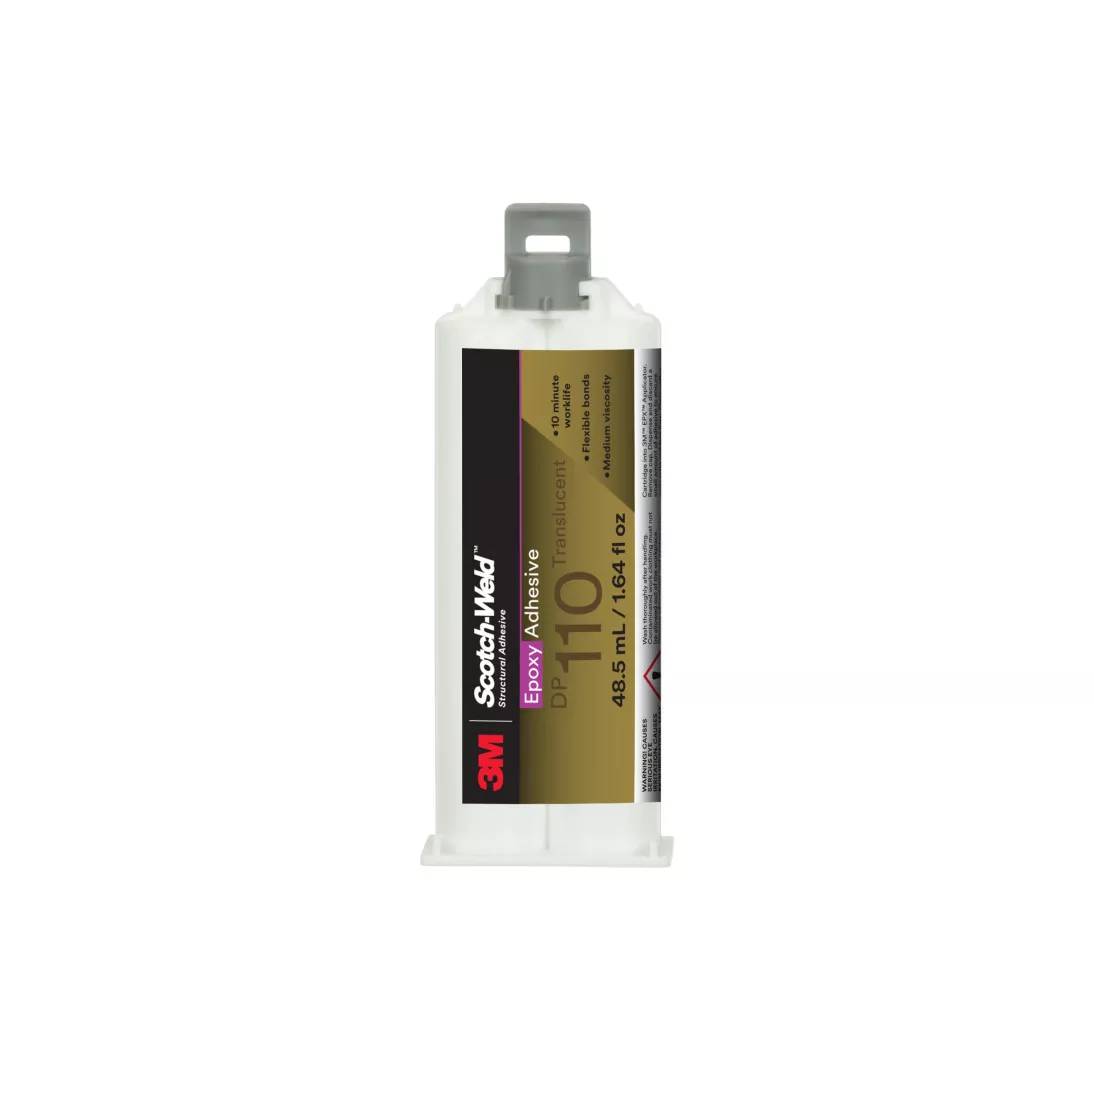 3M™ Scotch-Weld™ Epoxy Adhesive DP110, Translucent, 48.5mL Duo-Pak,
12/case